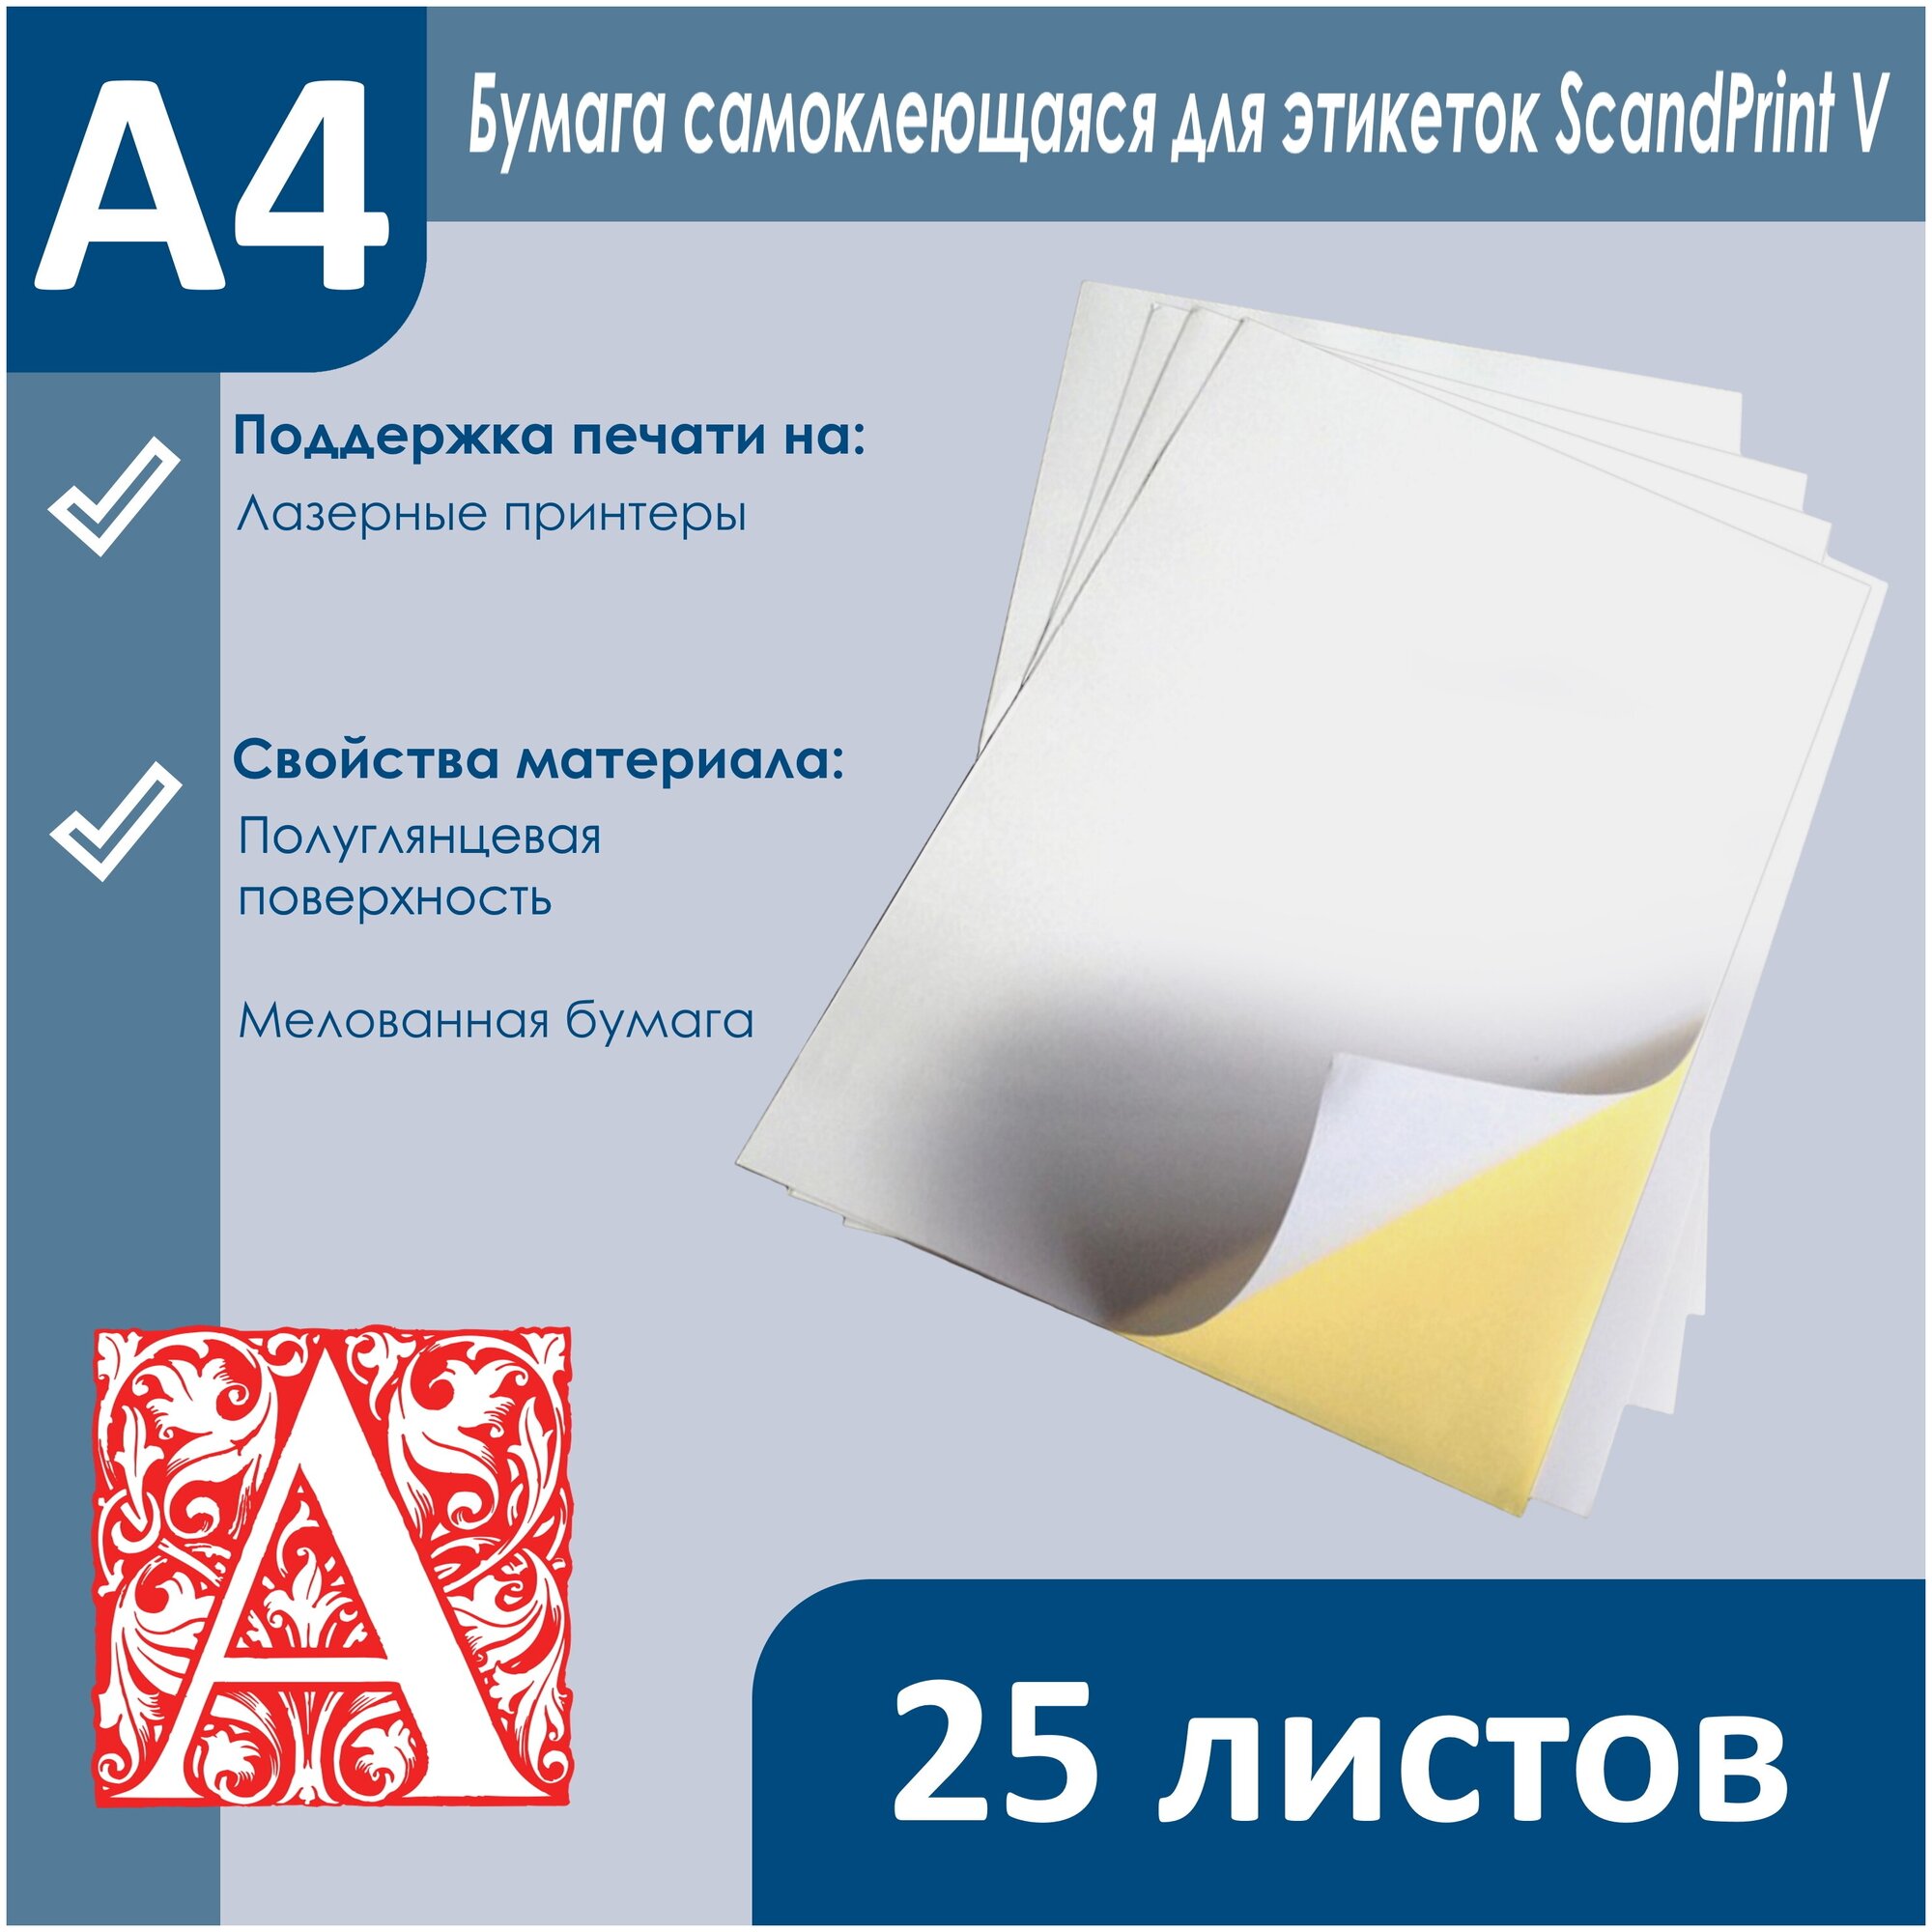 Бумага самоклеящаяся для этикеток ScandPrint V, размер А4, 25 листов